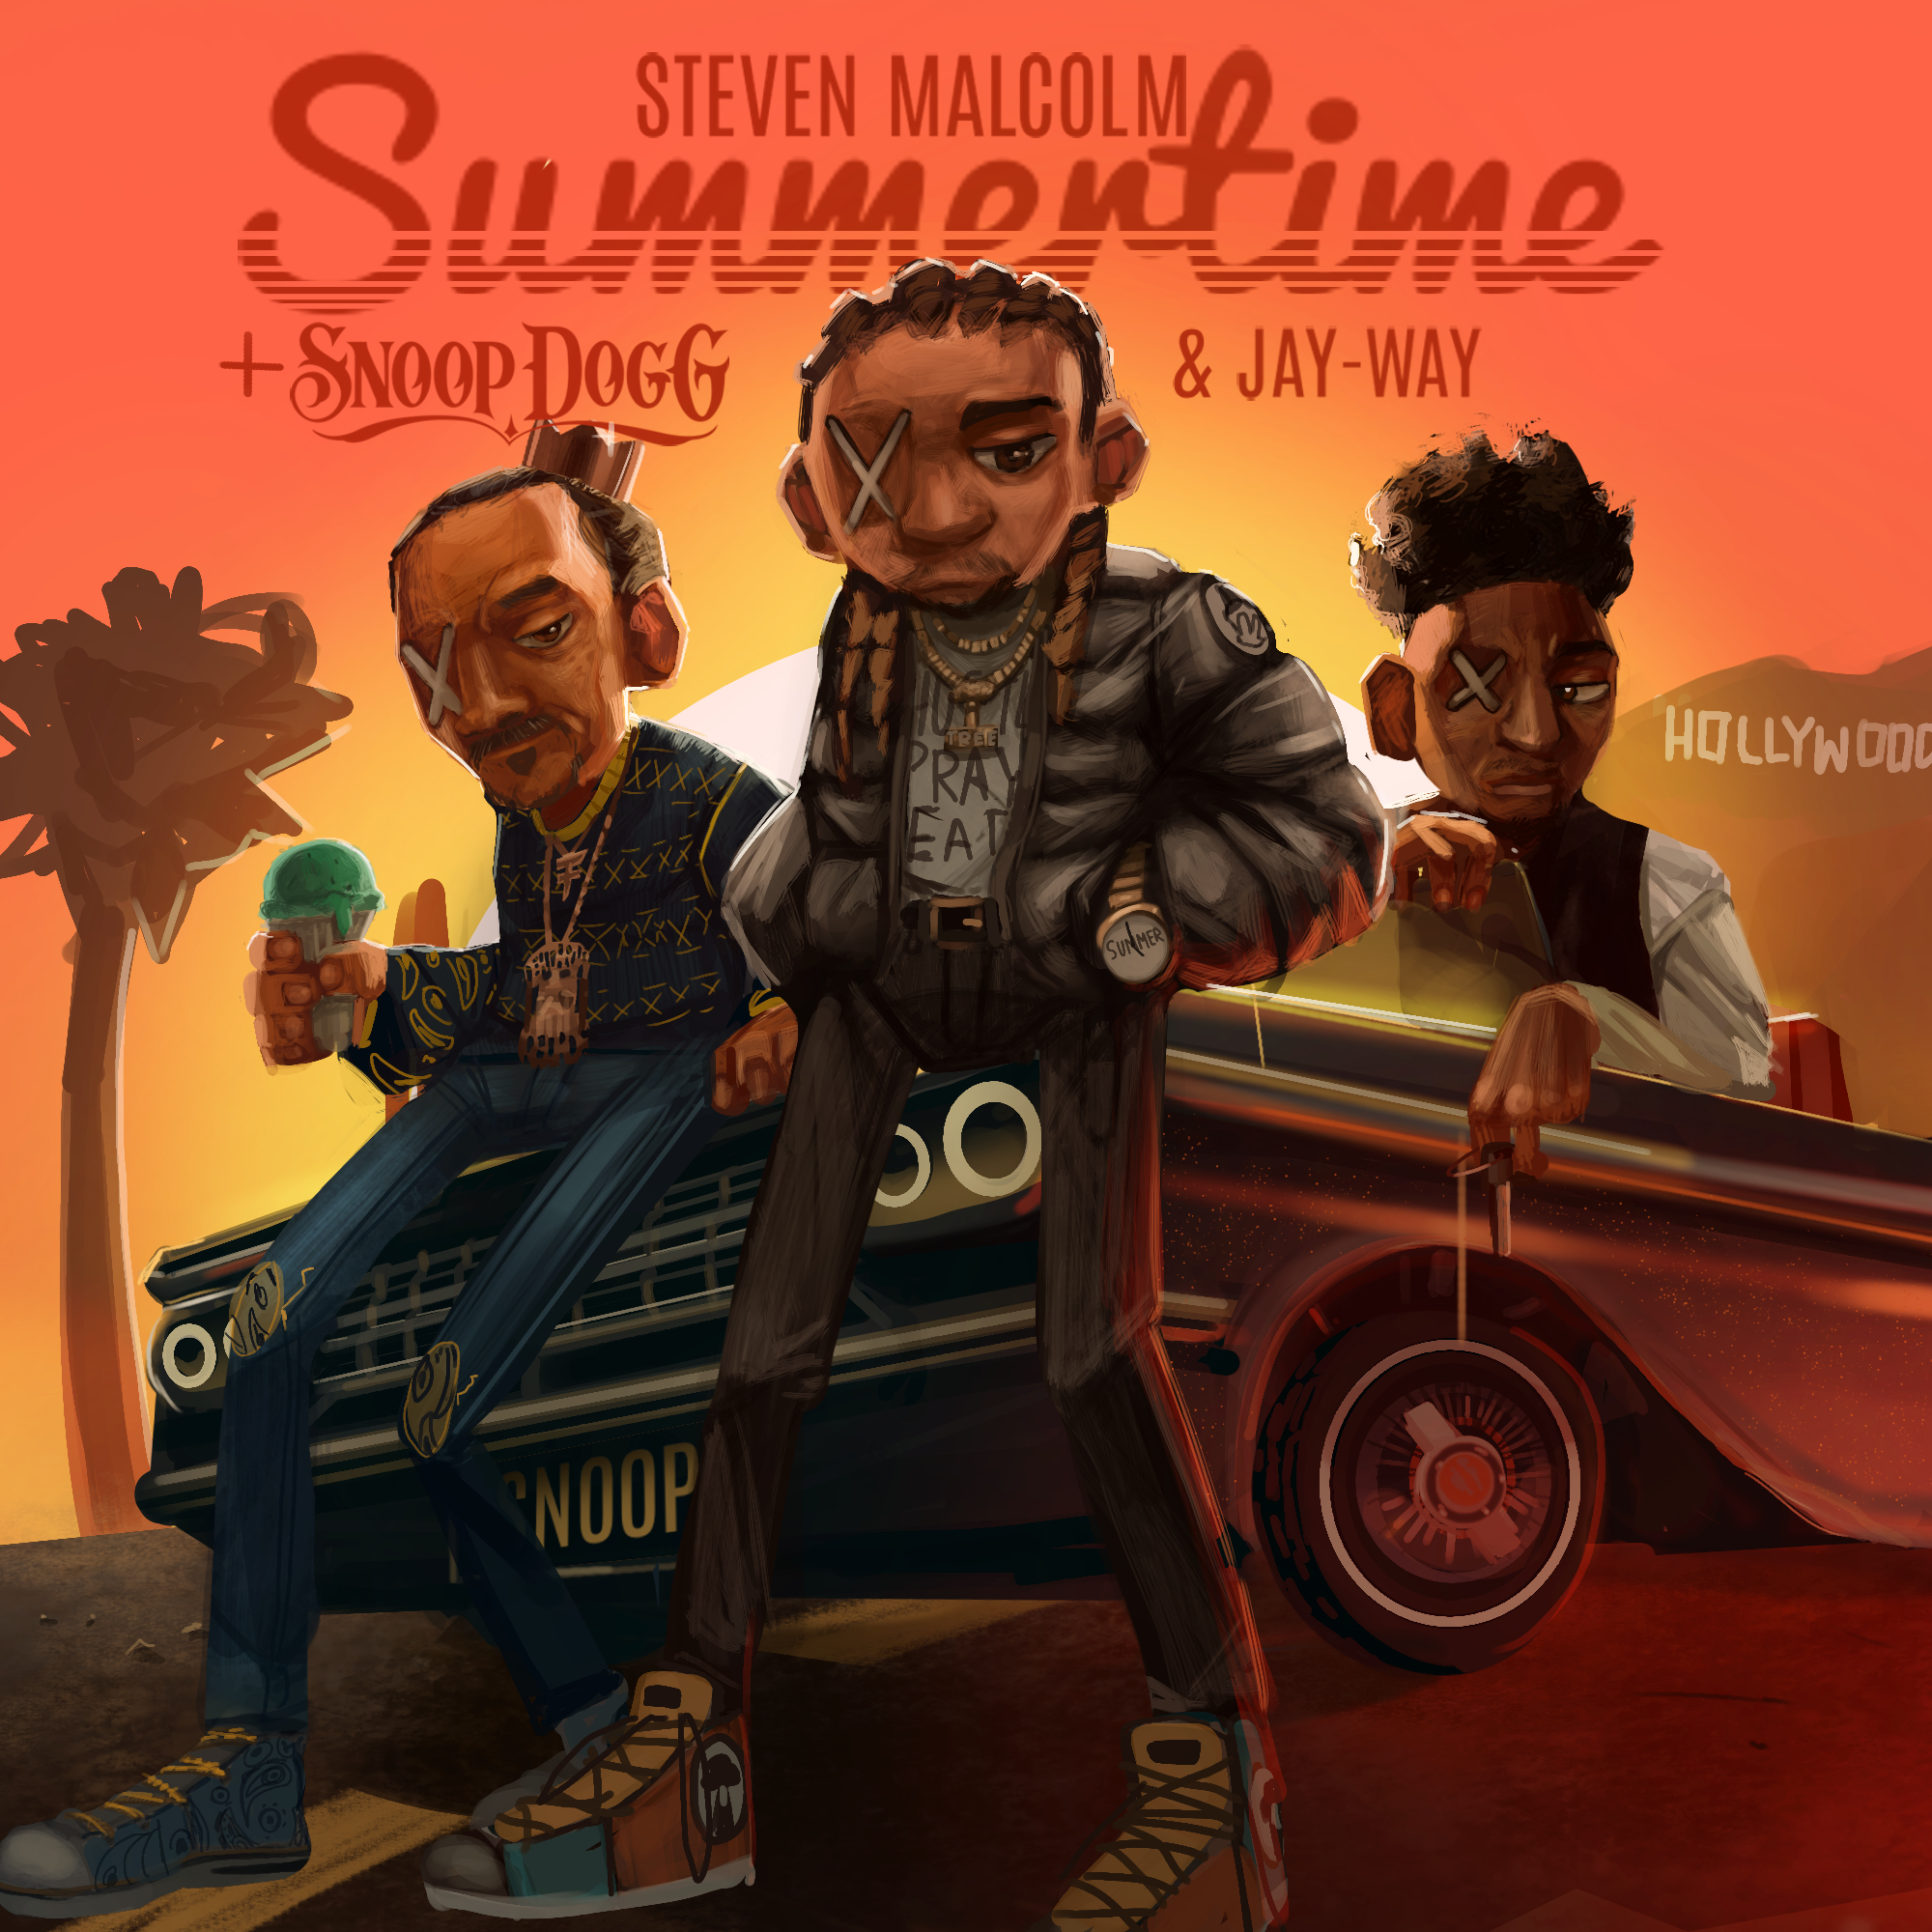 Steven Malcolm x Snoop Dogg x Jay-Way – “Summertime”